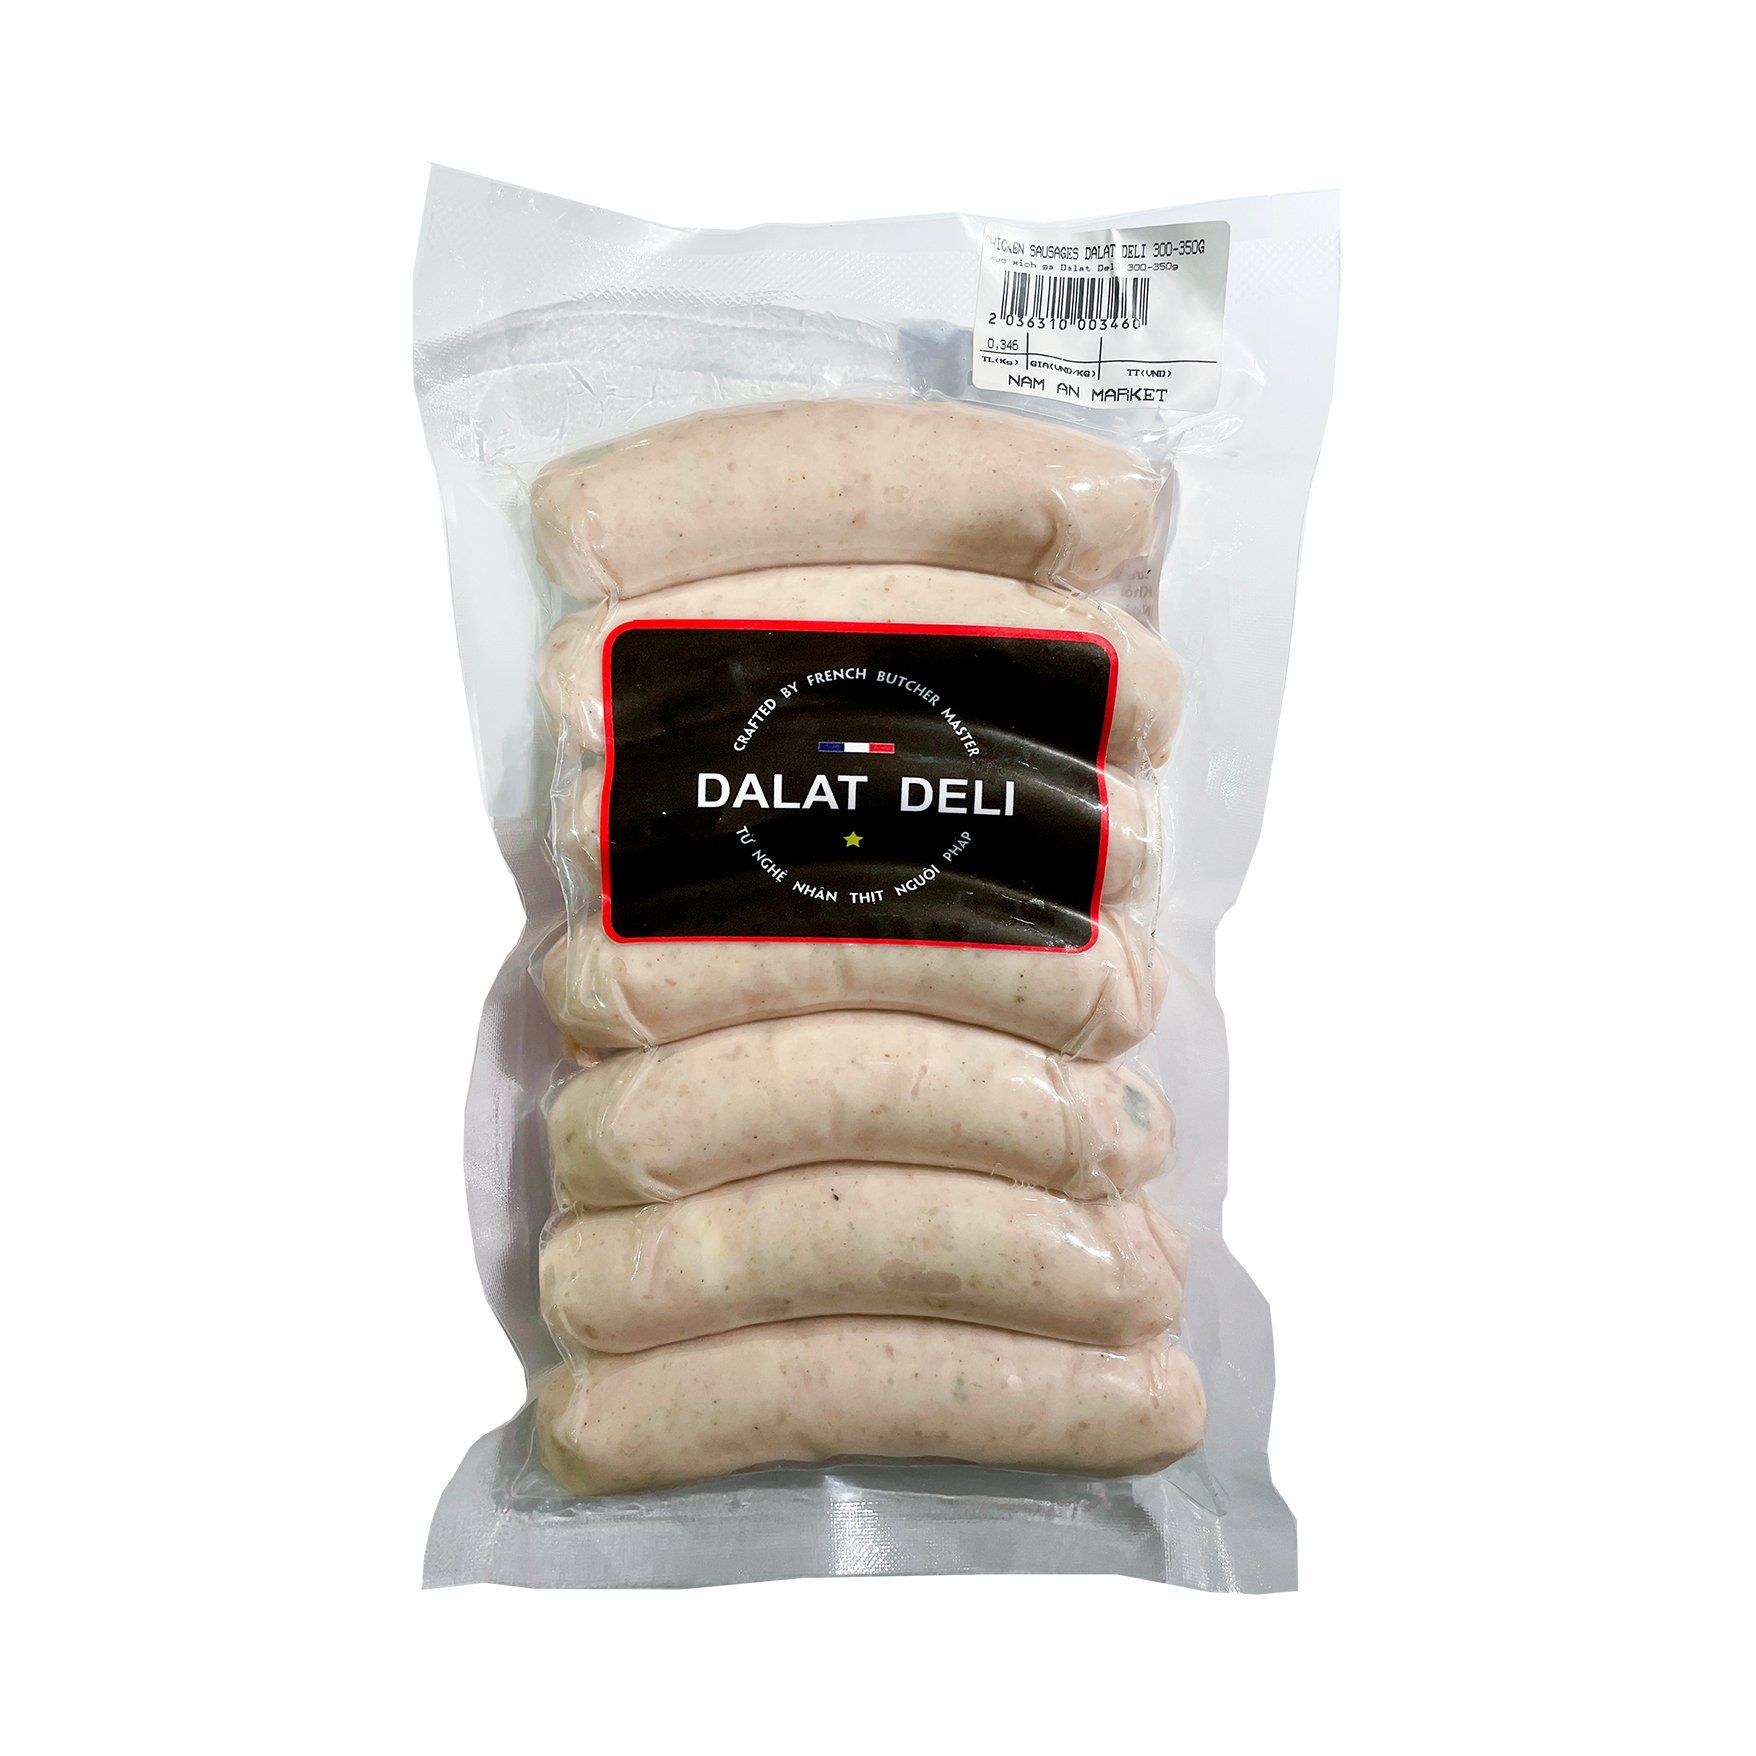 Chicken Sausage For Grill 35/50G Dalat Deli 300G- 